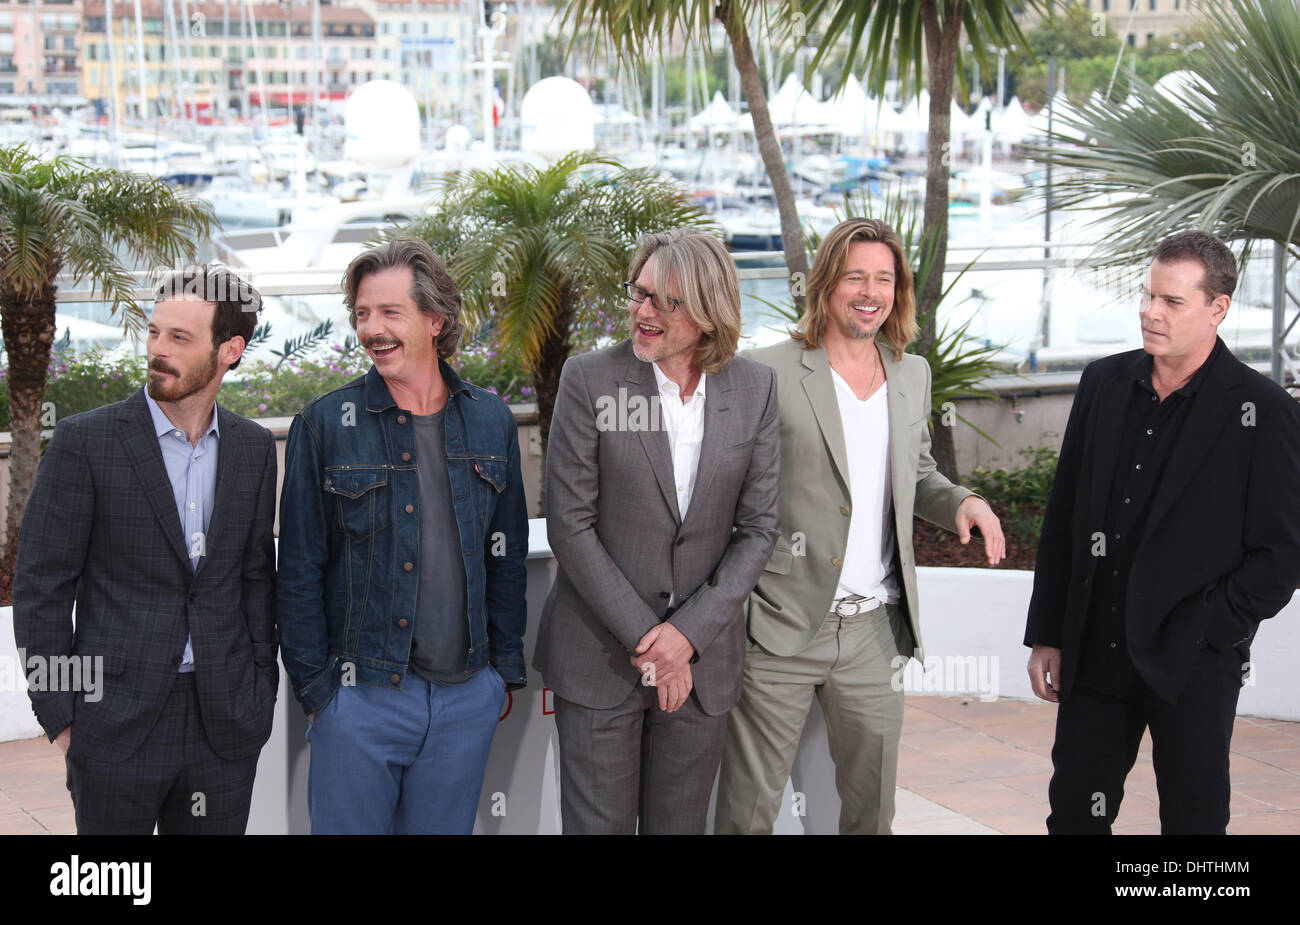 Scoot McNairy, Ben Mendelsohn, Regisseur Andrew Dominik, Brad Pitt und Ray Liotta "Töten leise" Fototermin während der 65. Cannes Film-Festival Cannes, France - 22.05.12 Stockfoto